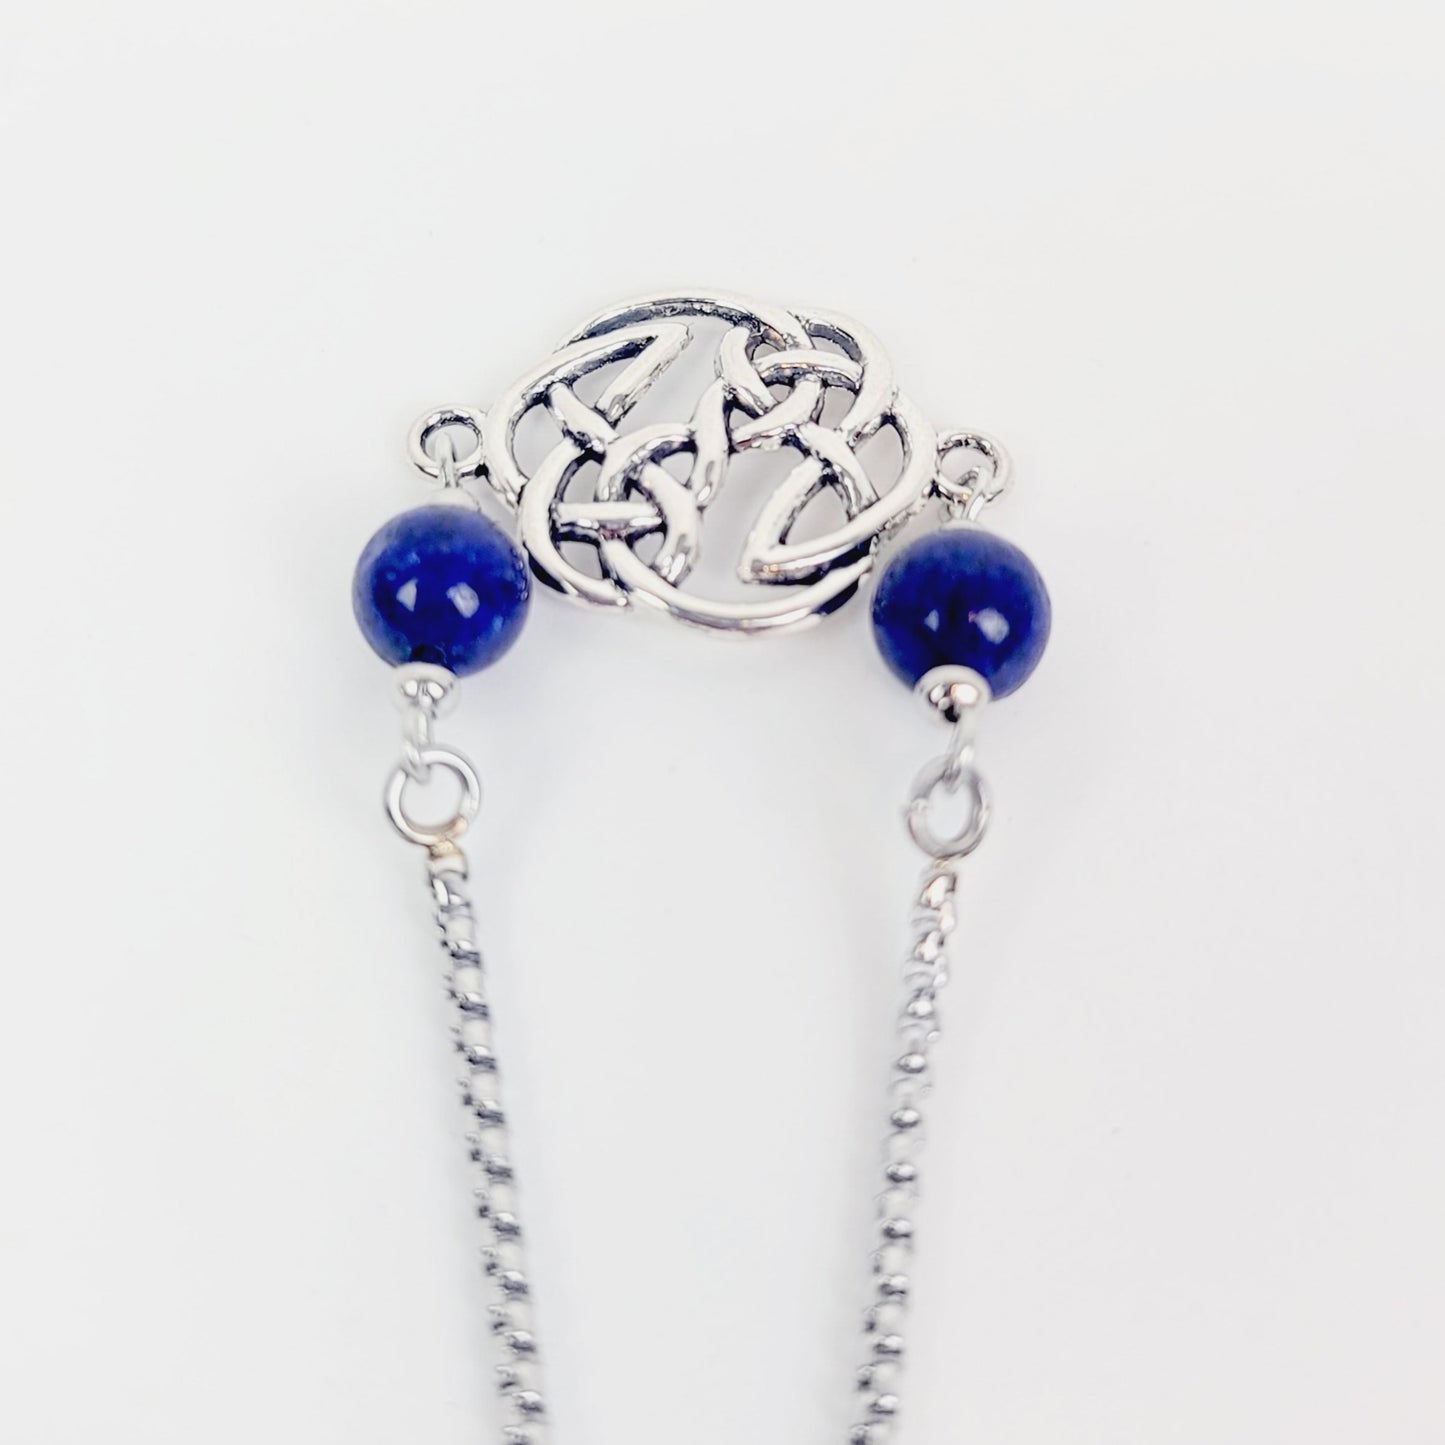 Penis Noose Chain Bracelet with Celtic Sheild Knot and Lapis Lazuli.